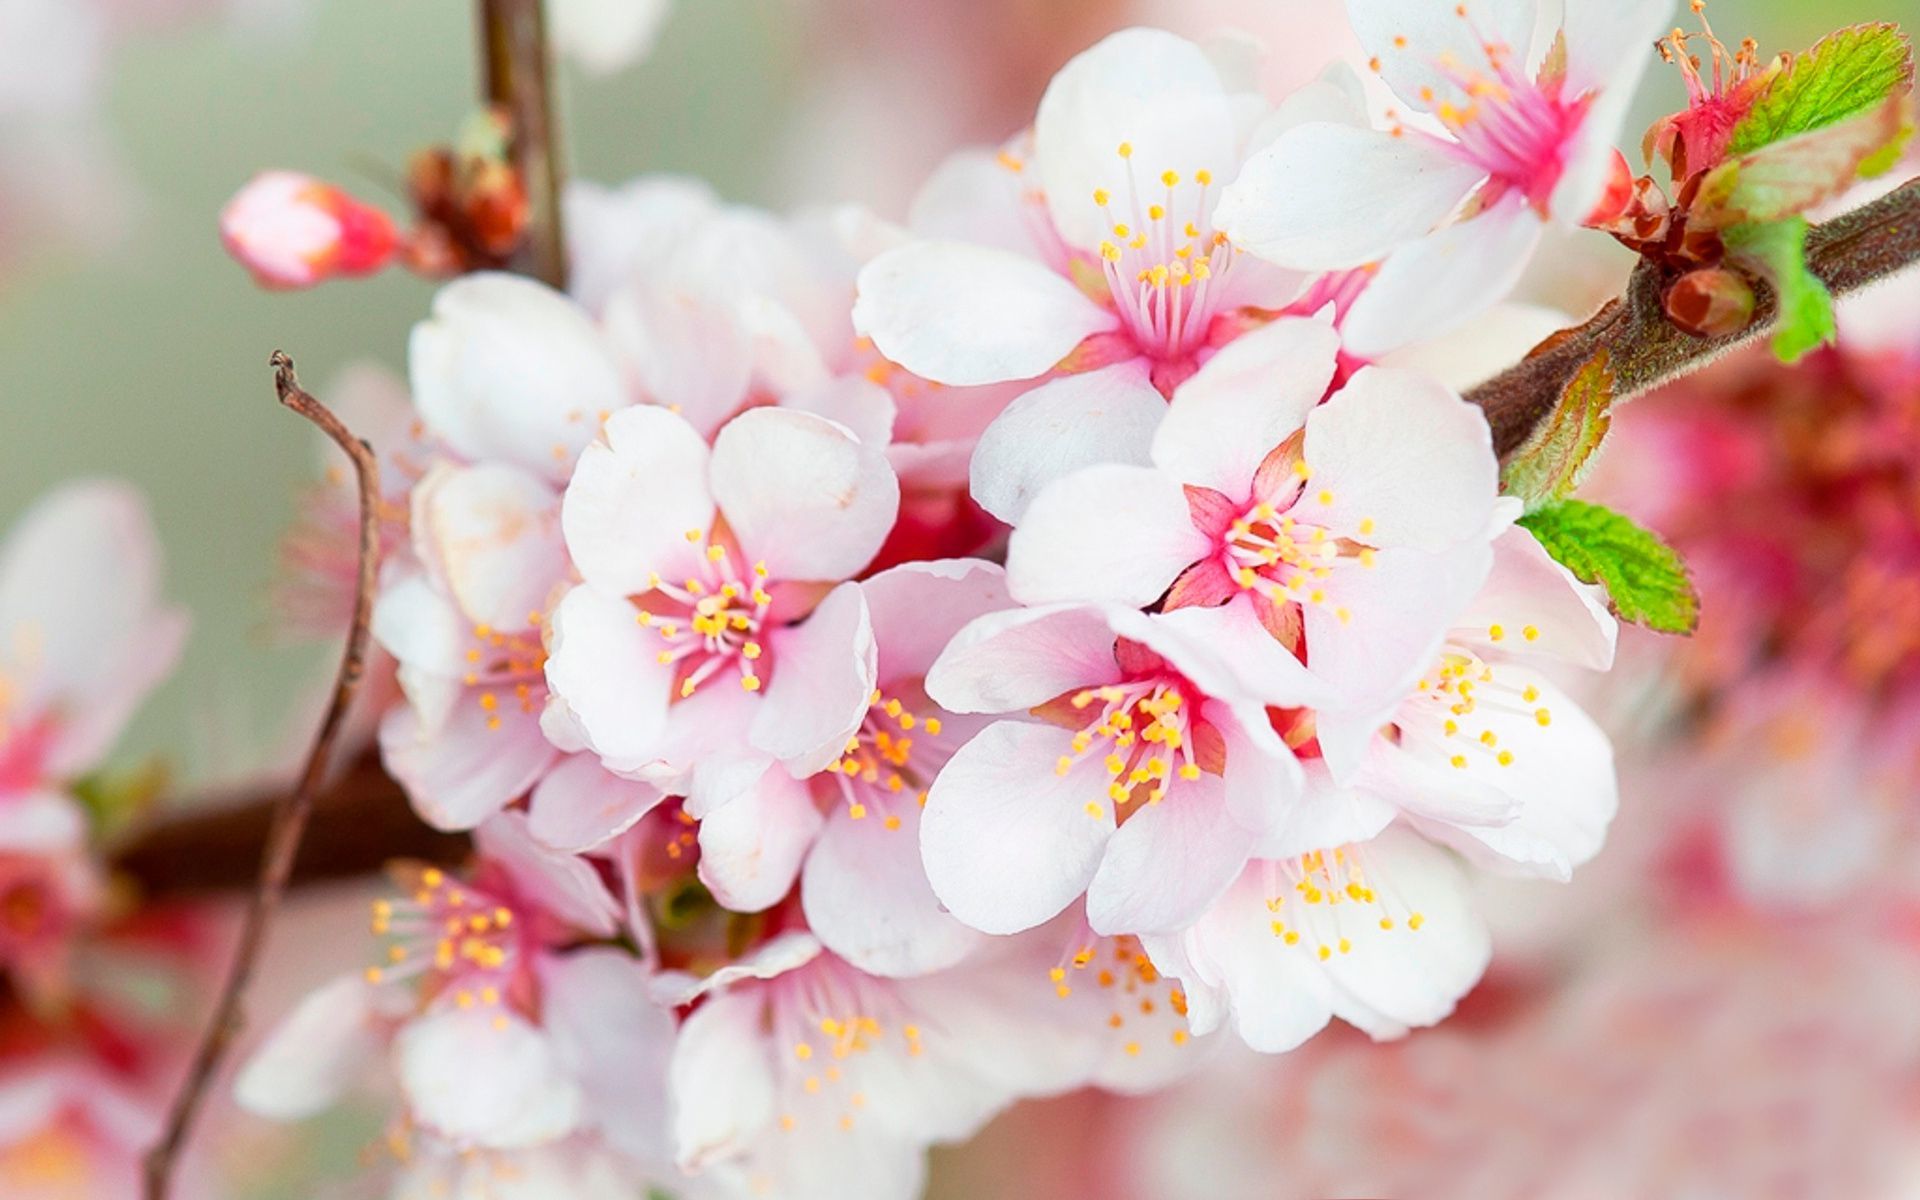 flor de cerezo fondos de escritorio,flor,florecer,pétalo,rosado,planta